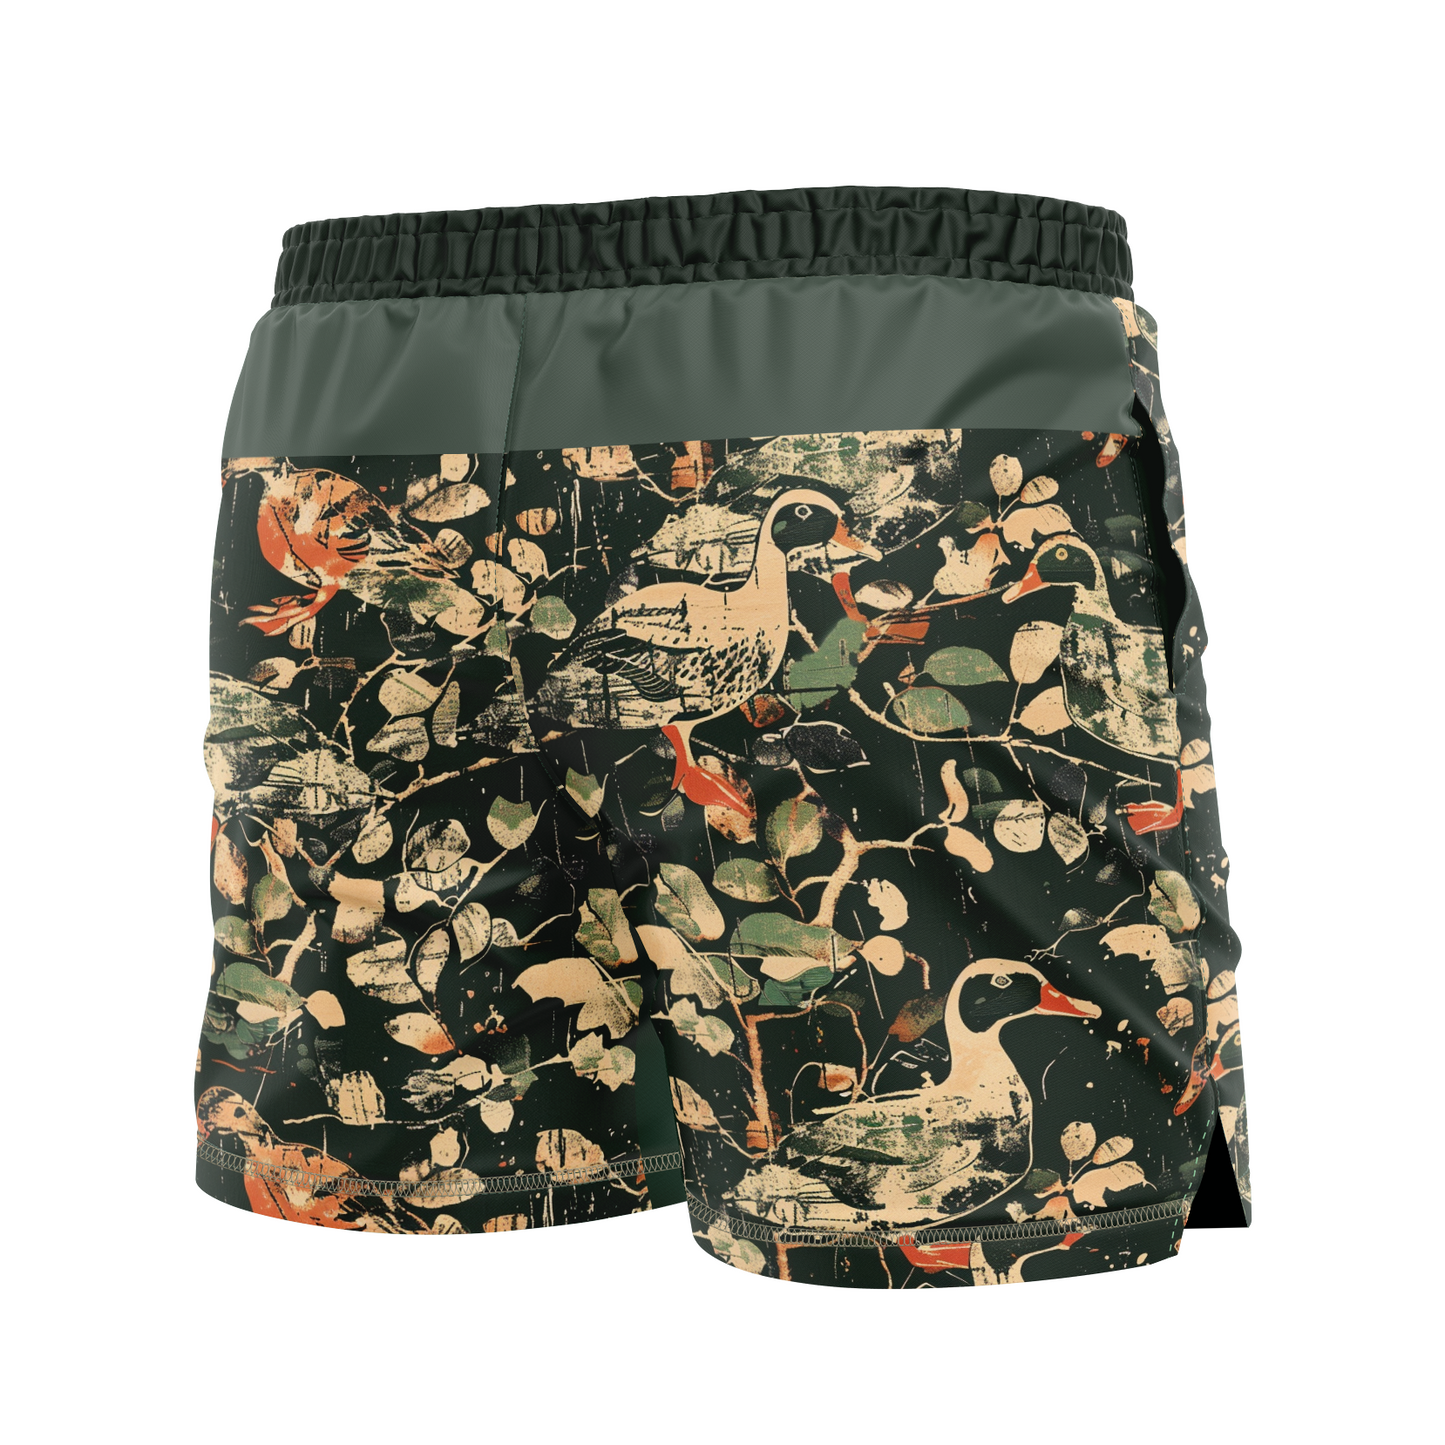 DxW: Pato Escondido men's FC shorts, green/tan